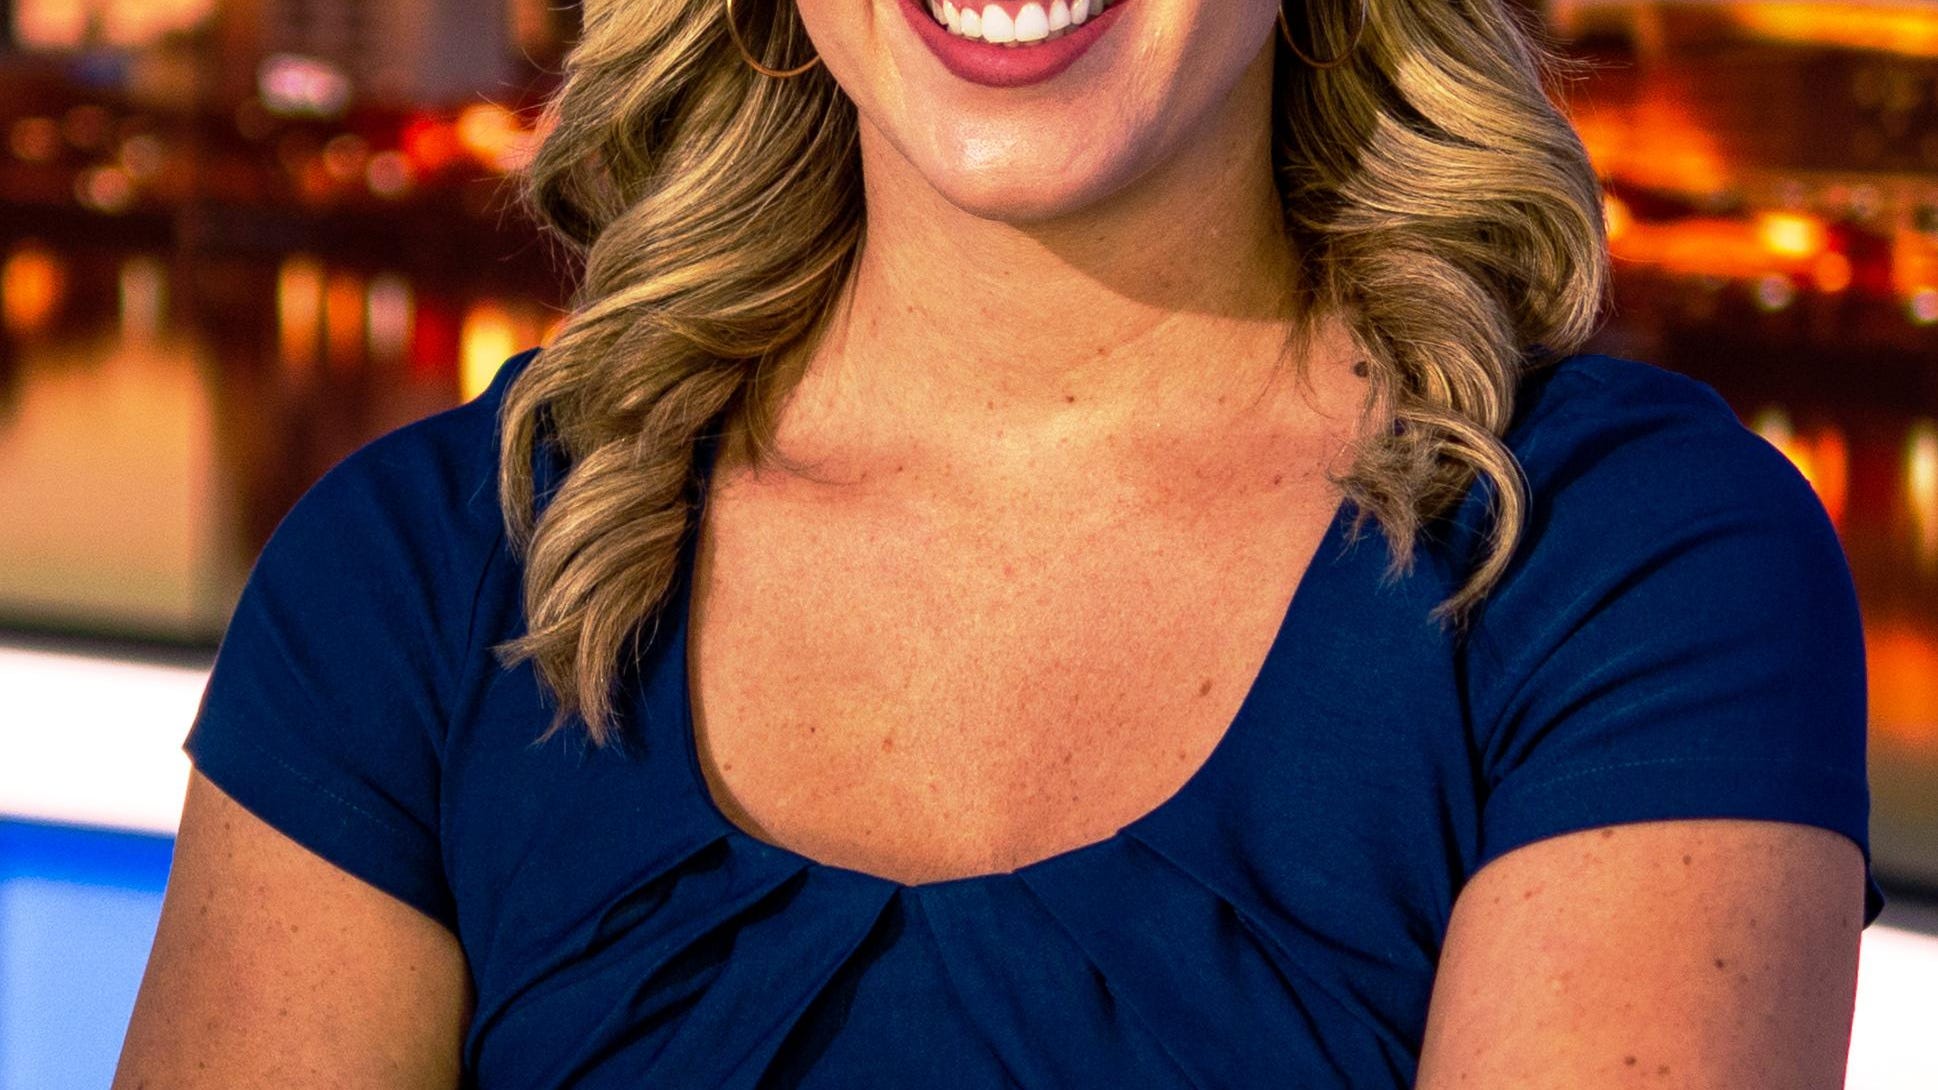 WEEK TV Hires Amber Krycka Formerly Of Florida As Its New News Anchor